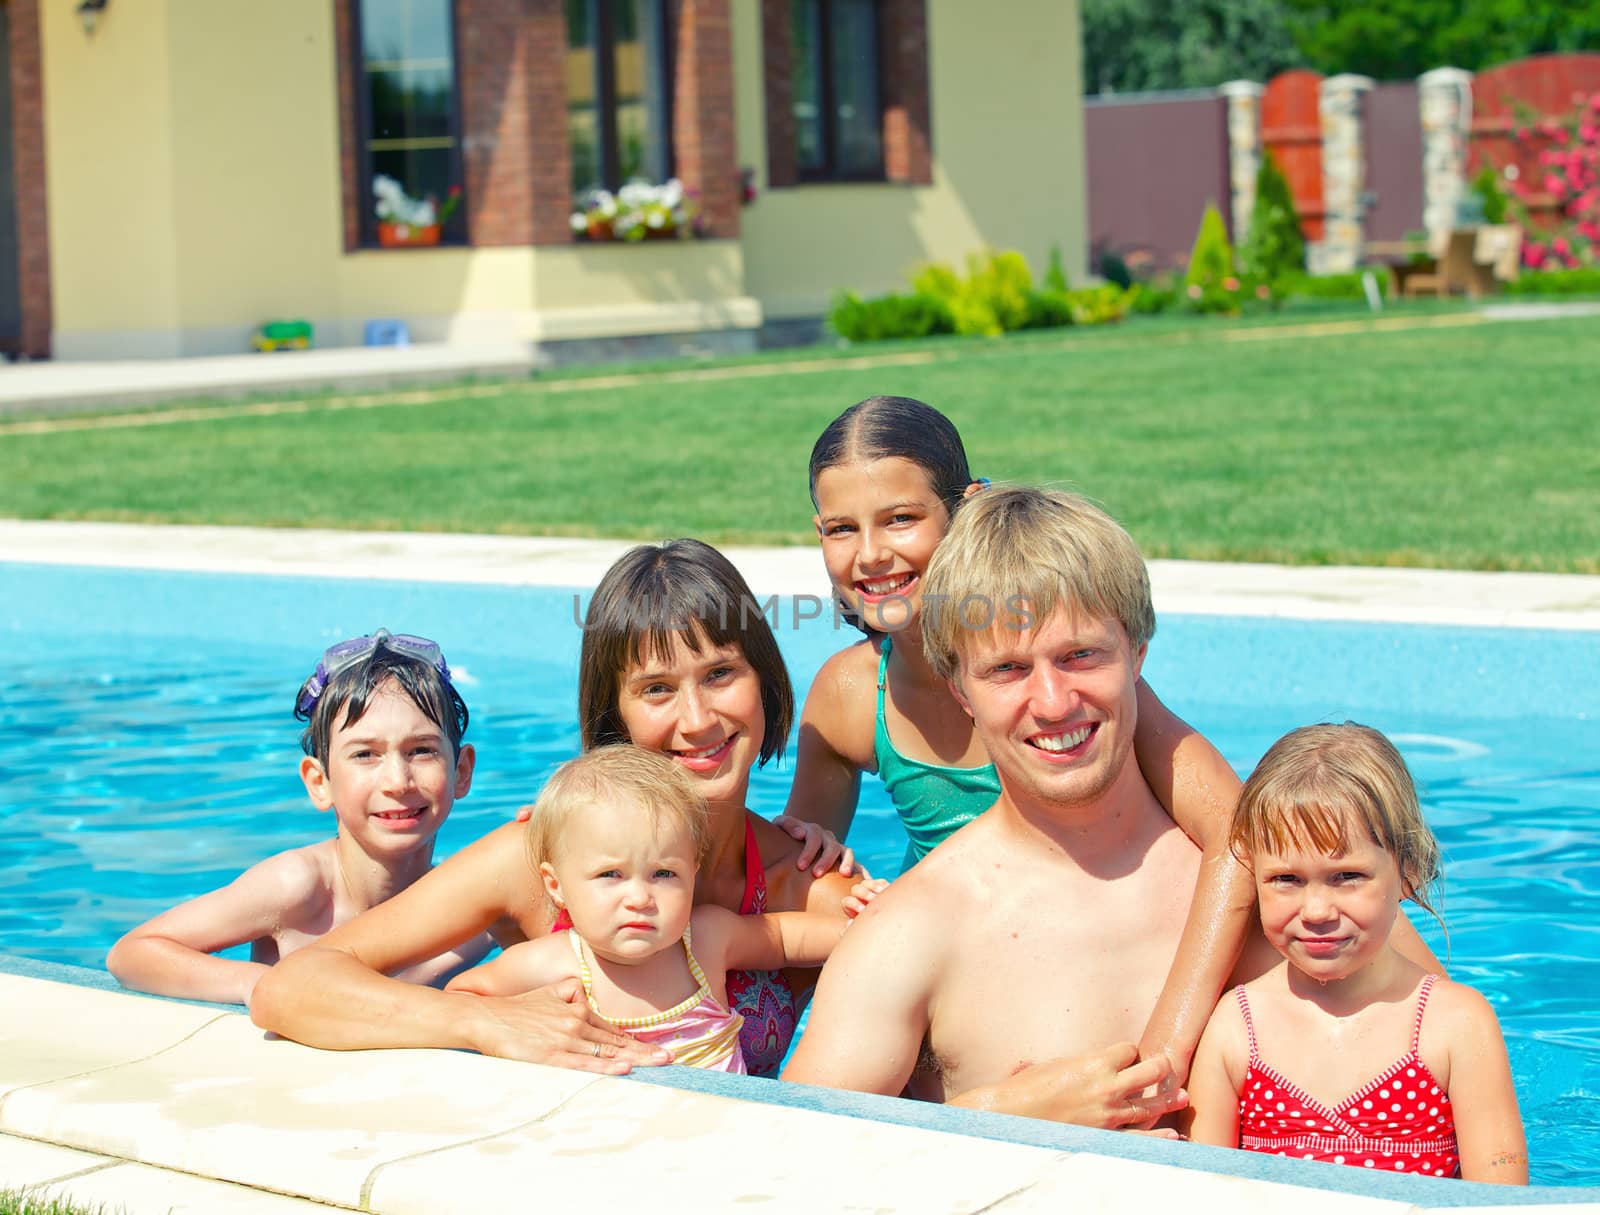 Family in the pool by maxoliki